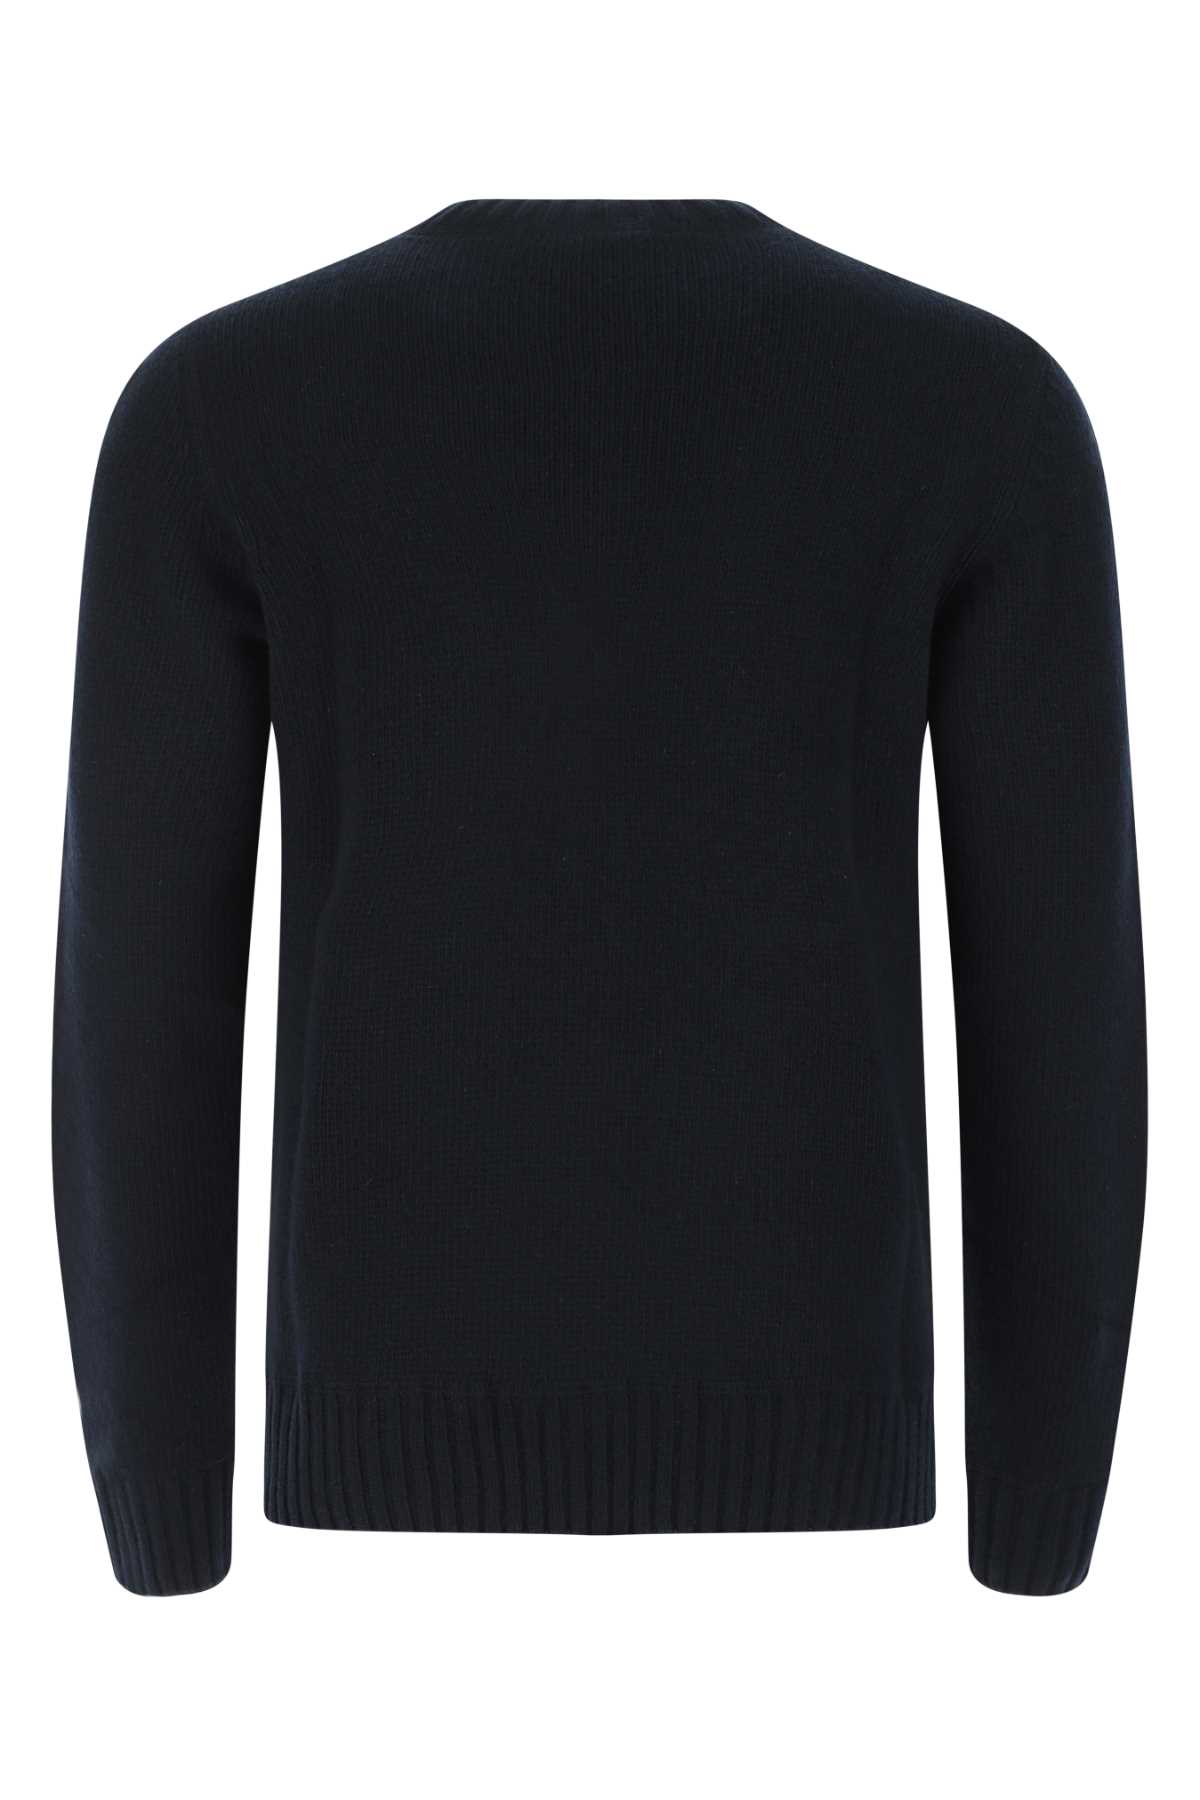 Prada Midnight Blue Wool Blend Sweater In F0008